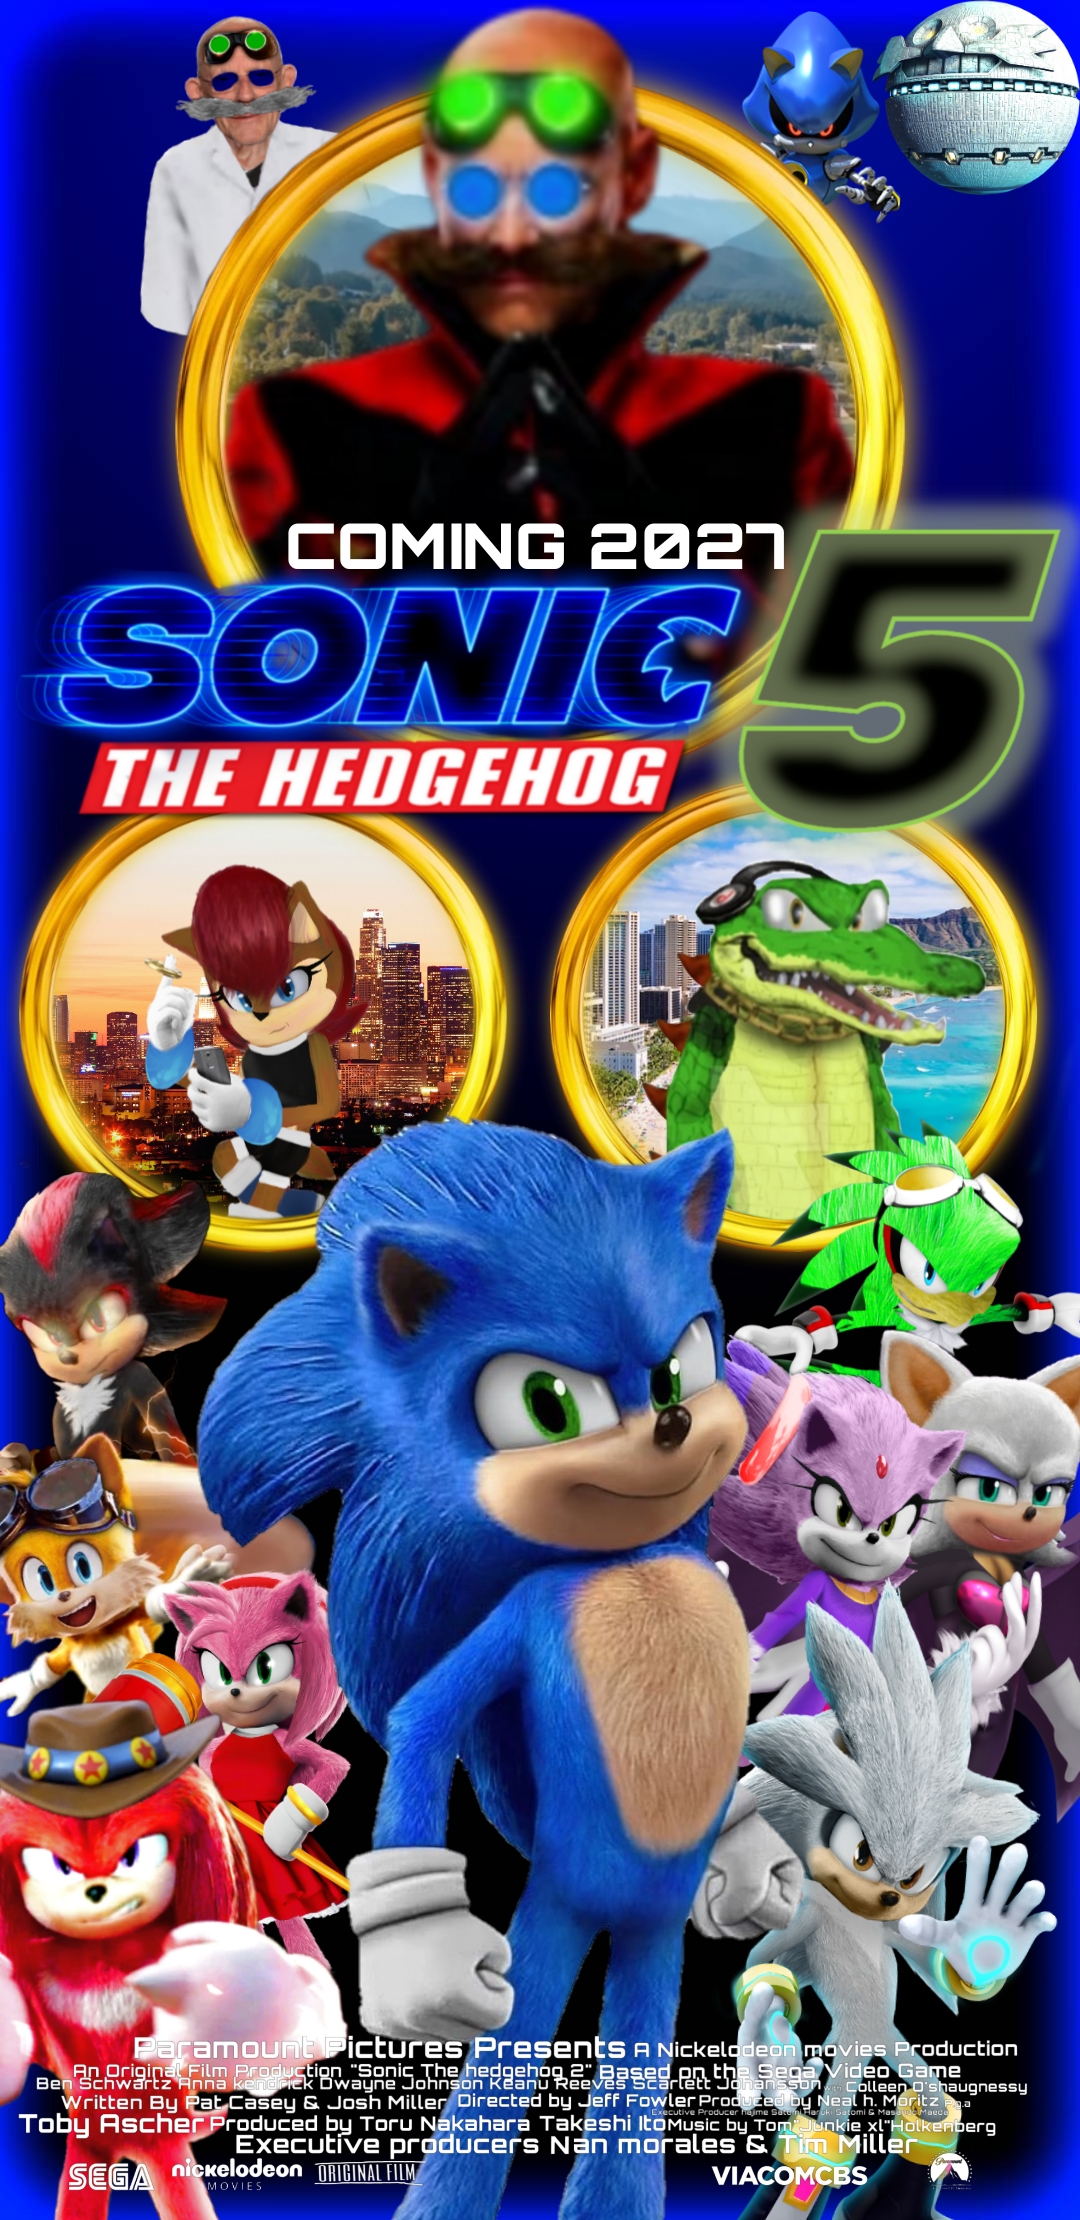 Sonic Movie 4 Poster by paulinaolguin on DeviantArt